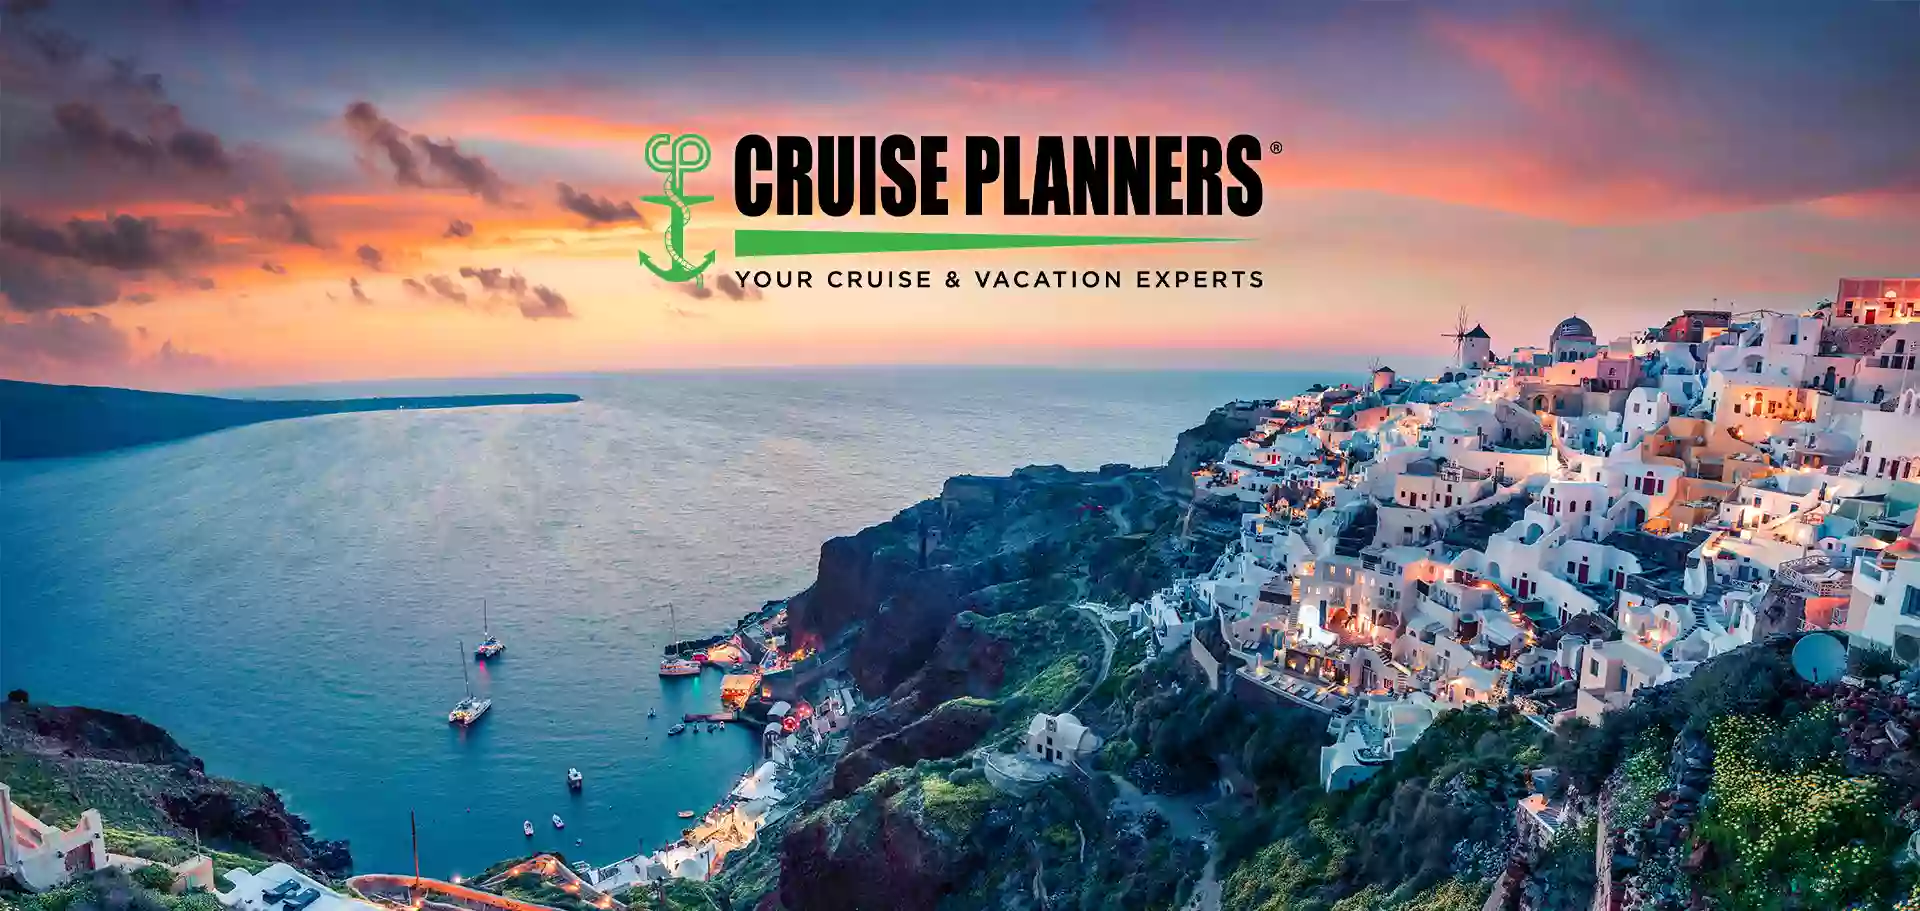 Cruise Planners - Delani Lemons